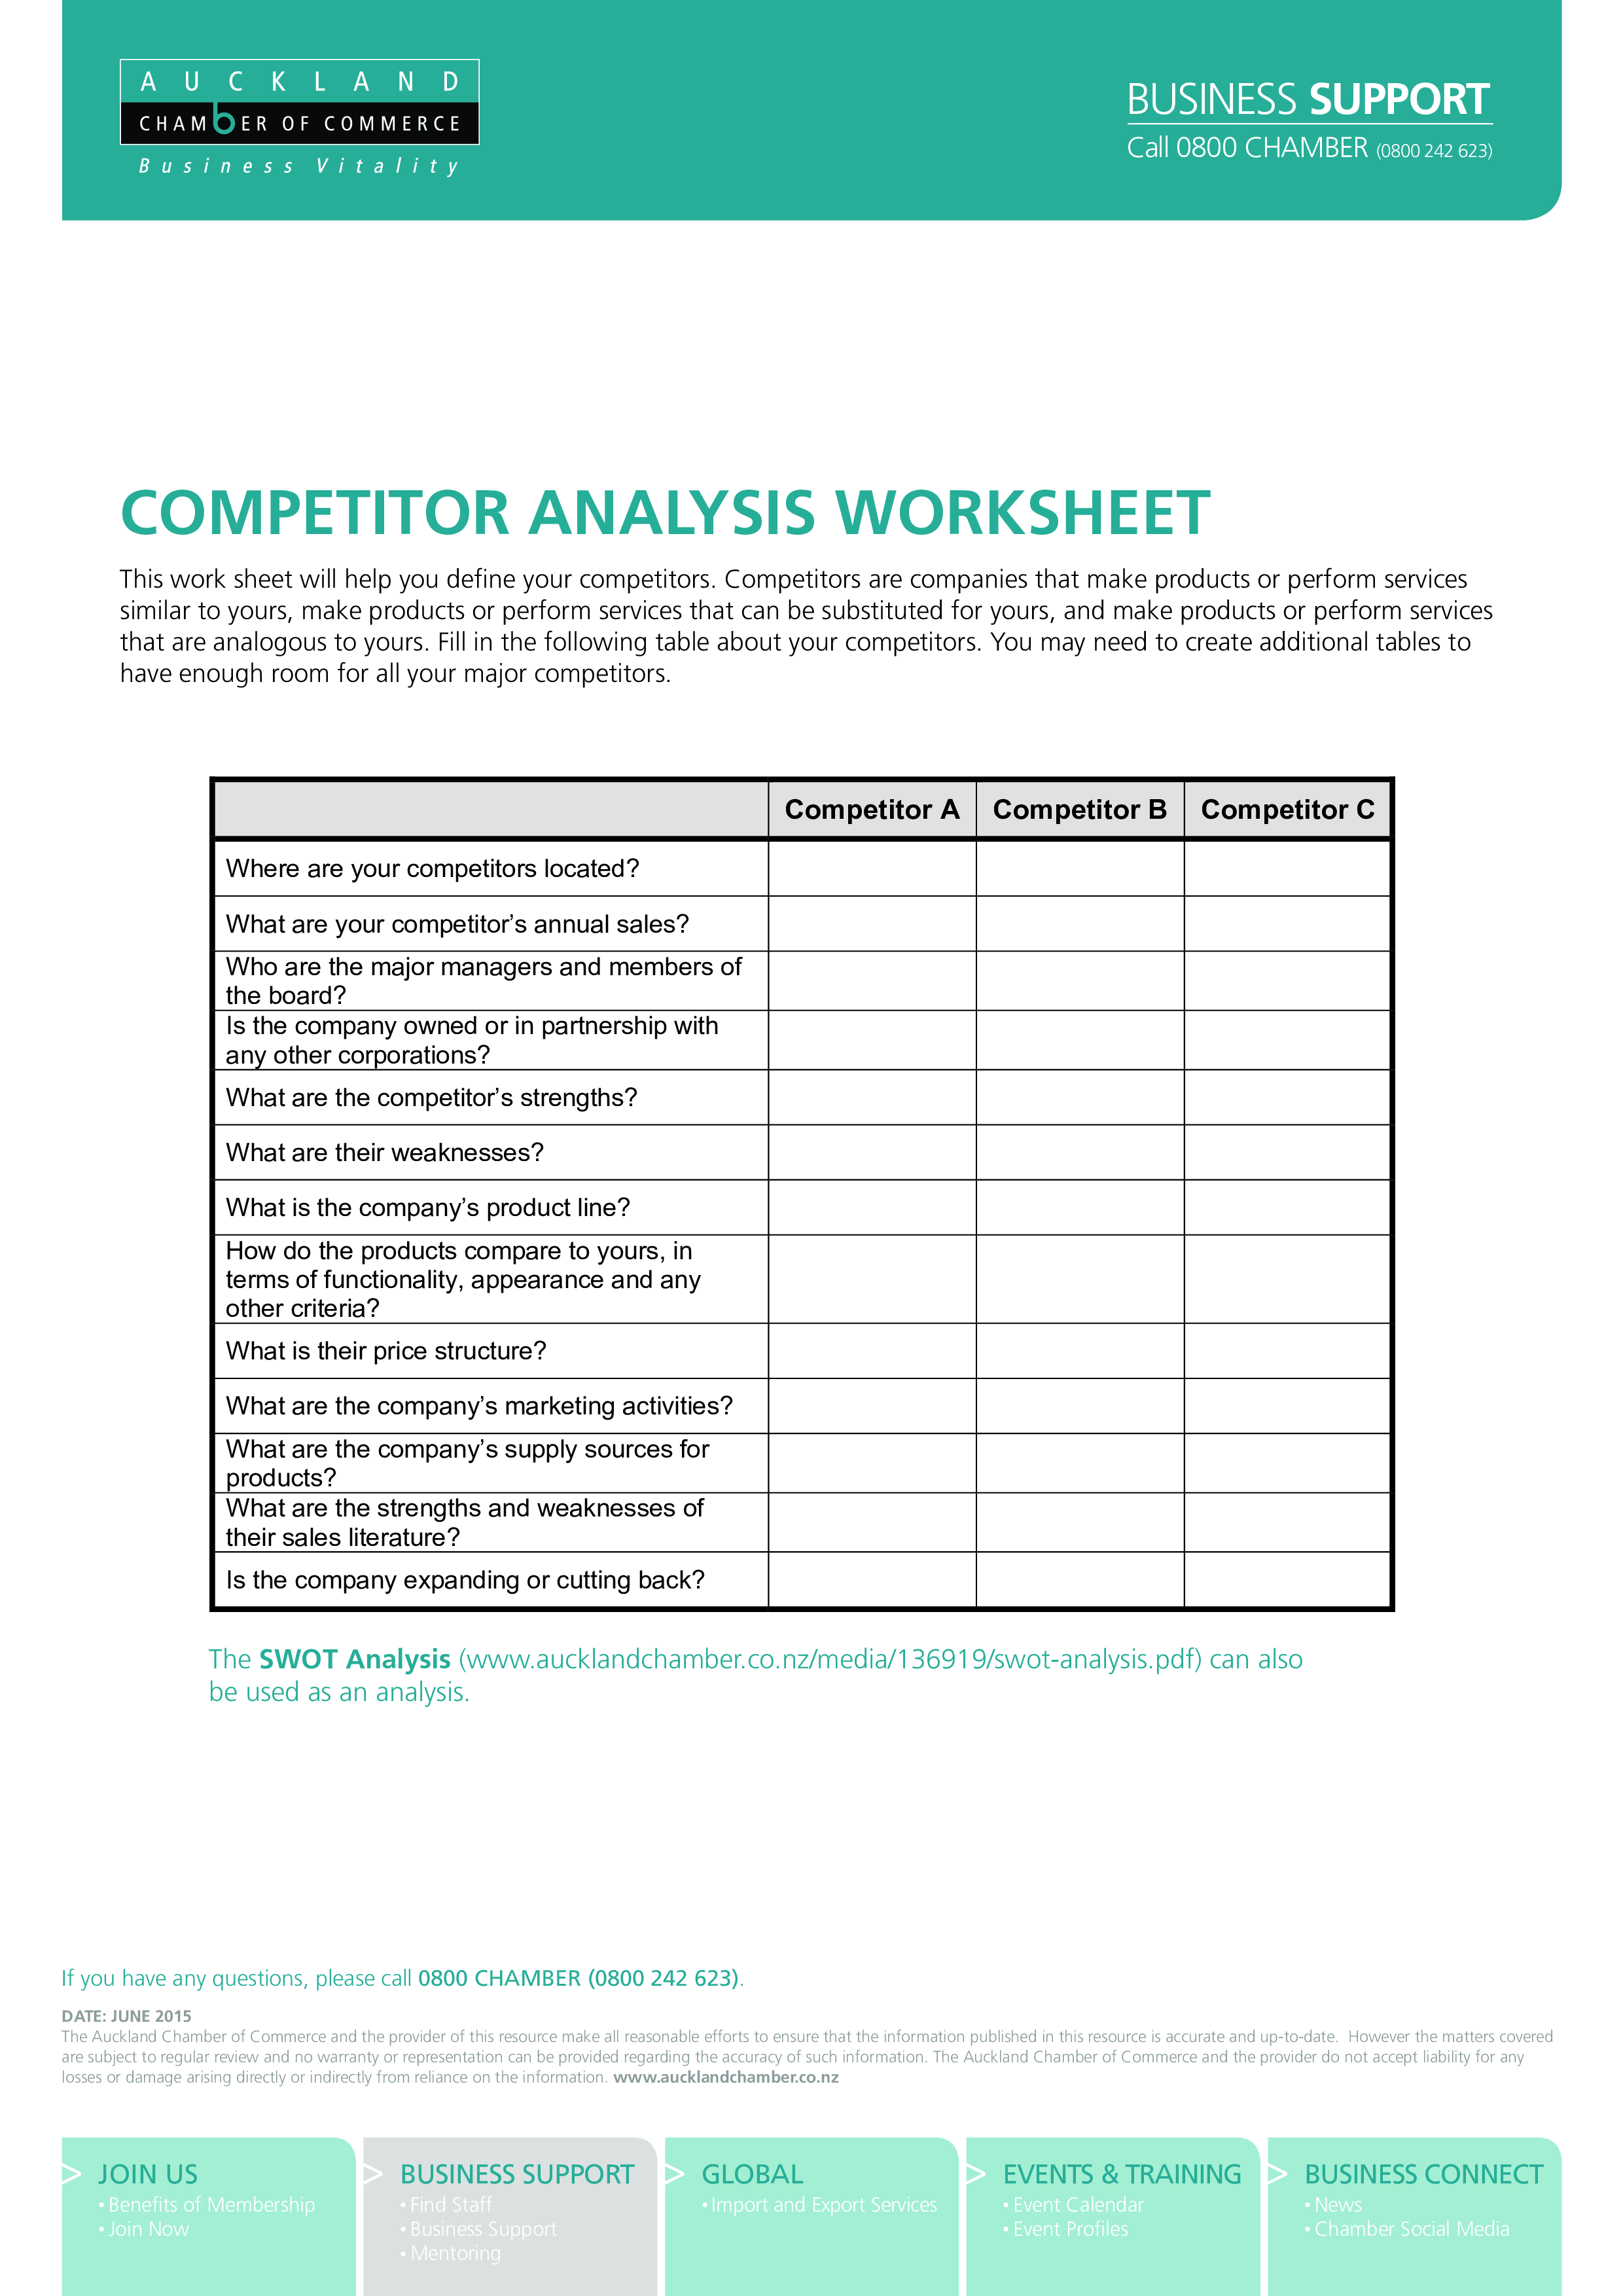 Competitor Analysis Worksheet Templates at